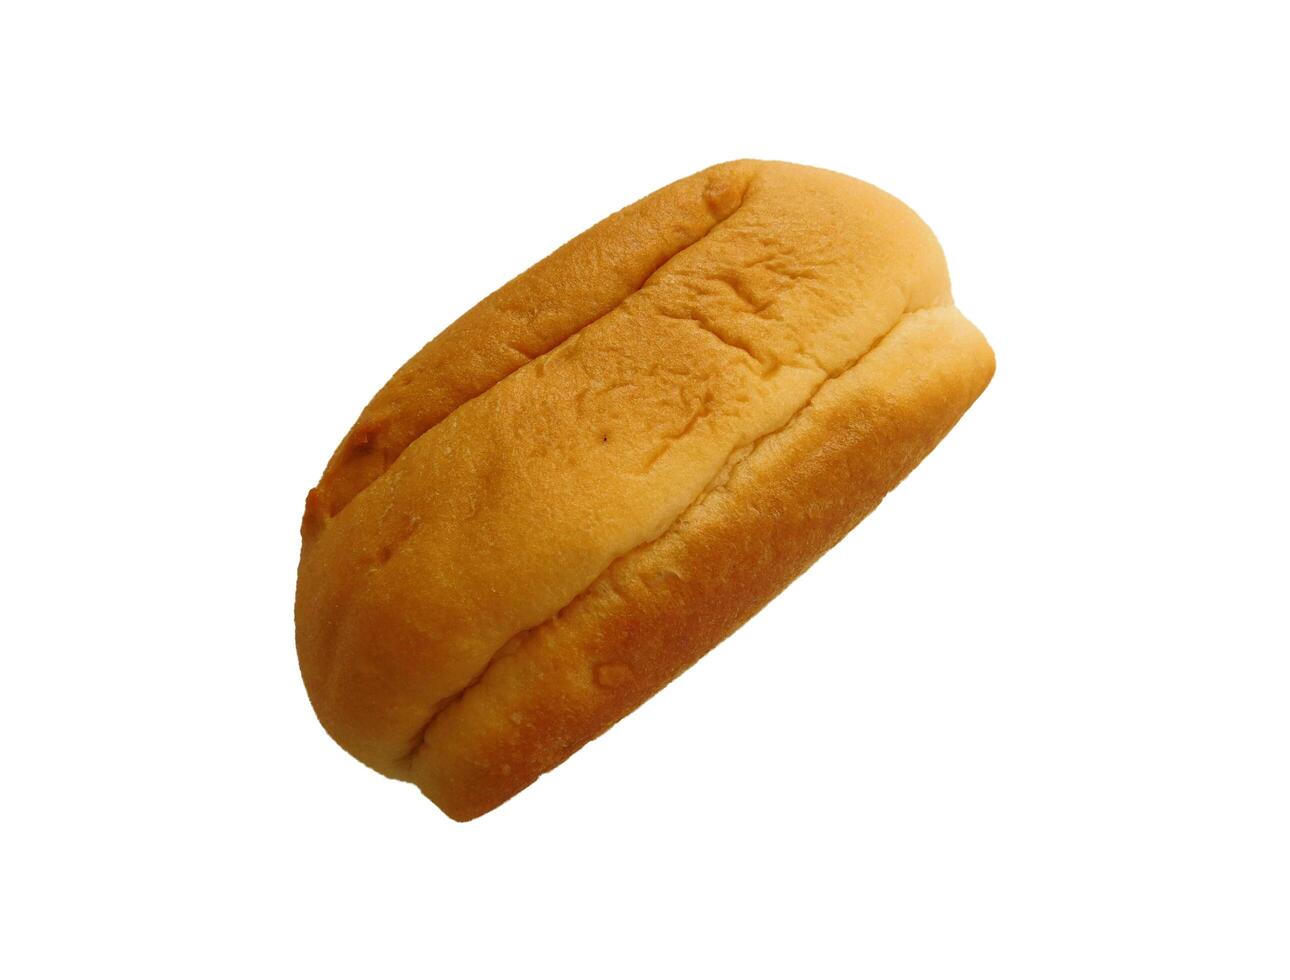 Bread on white background photo